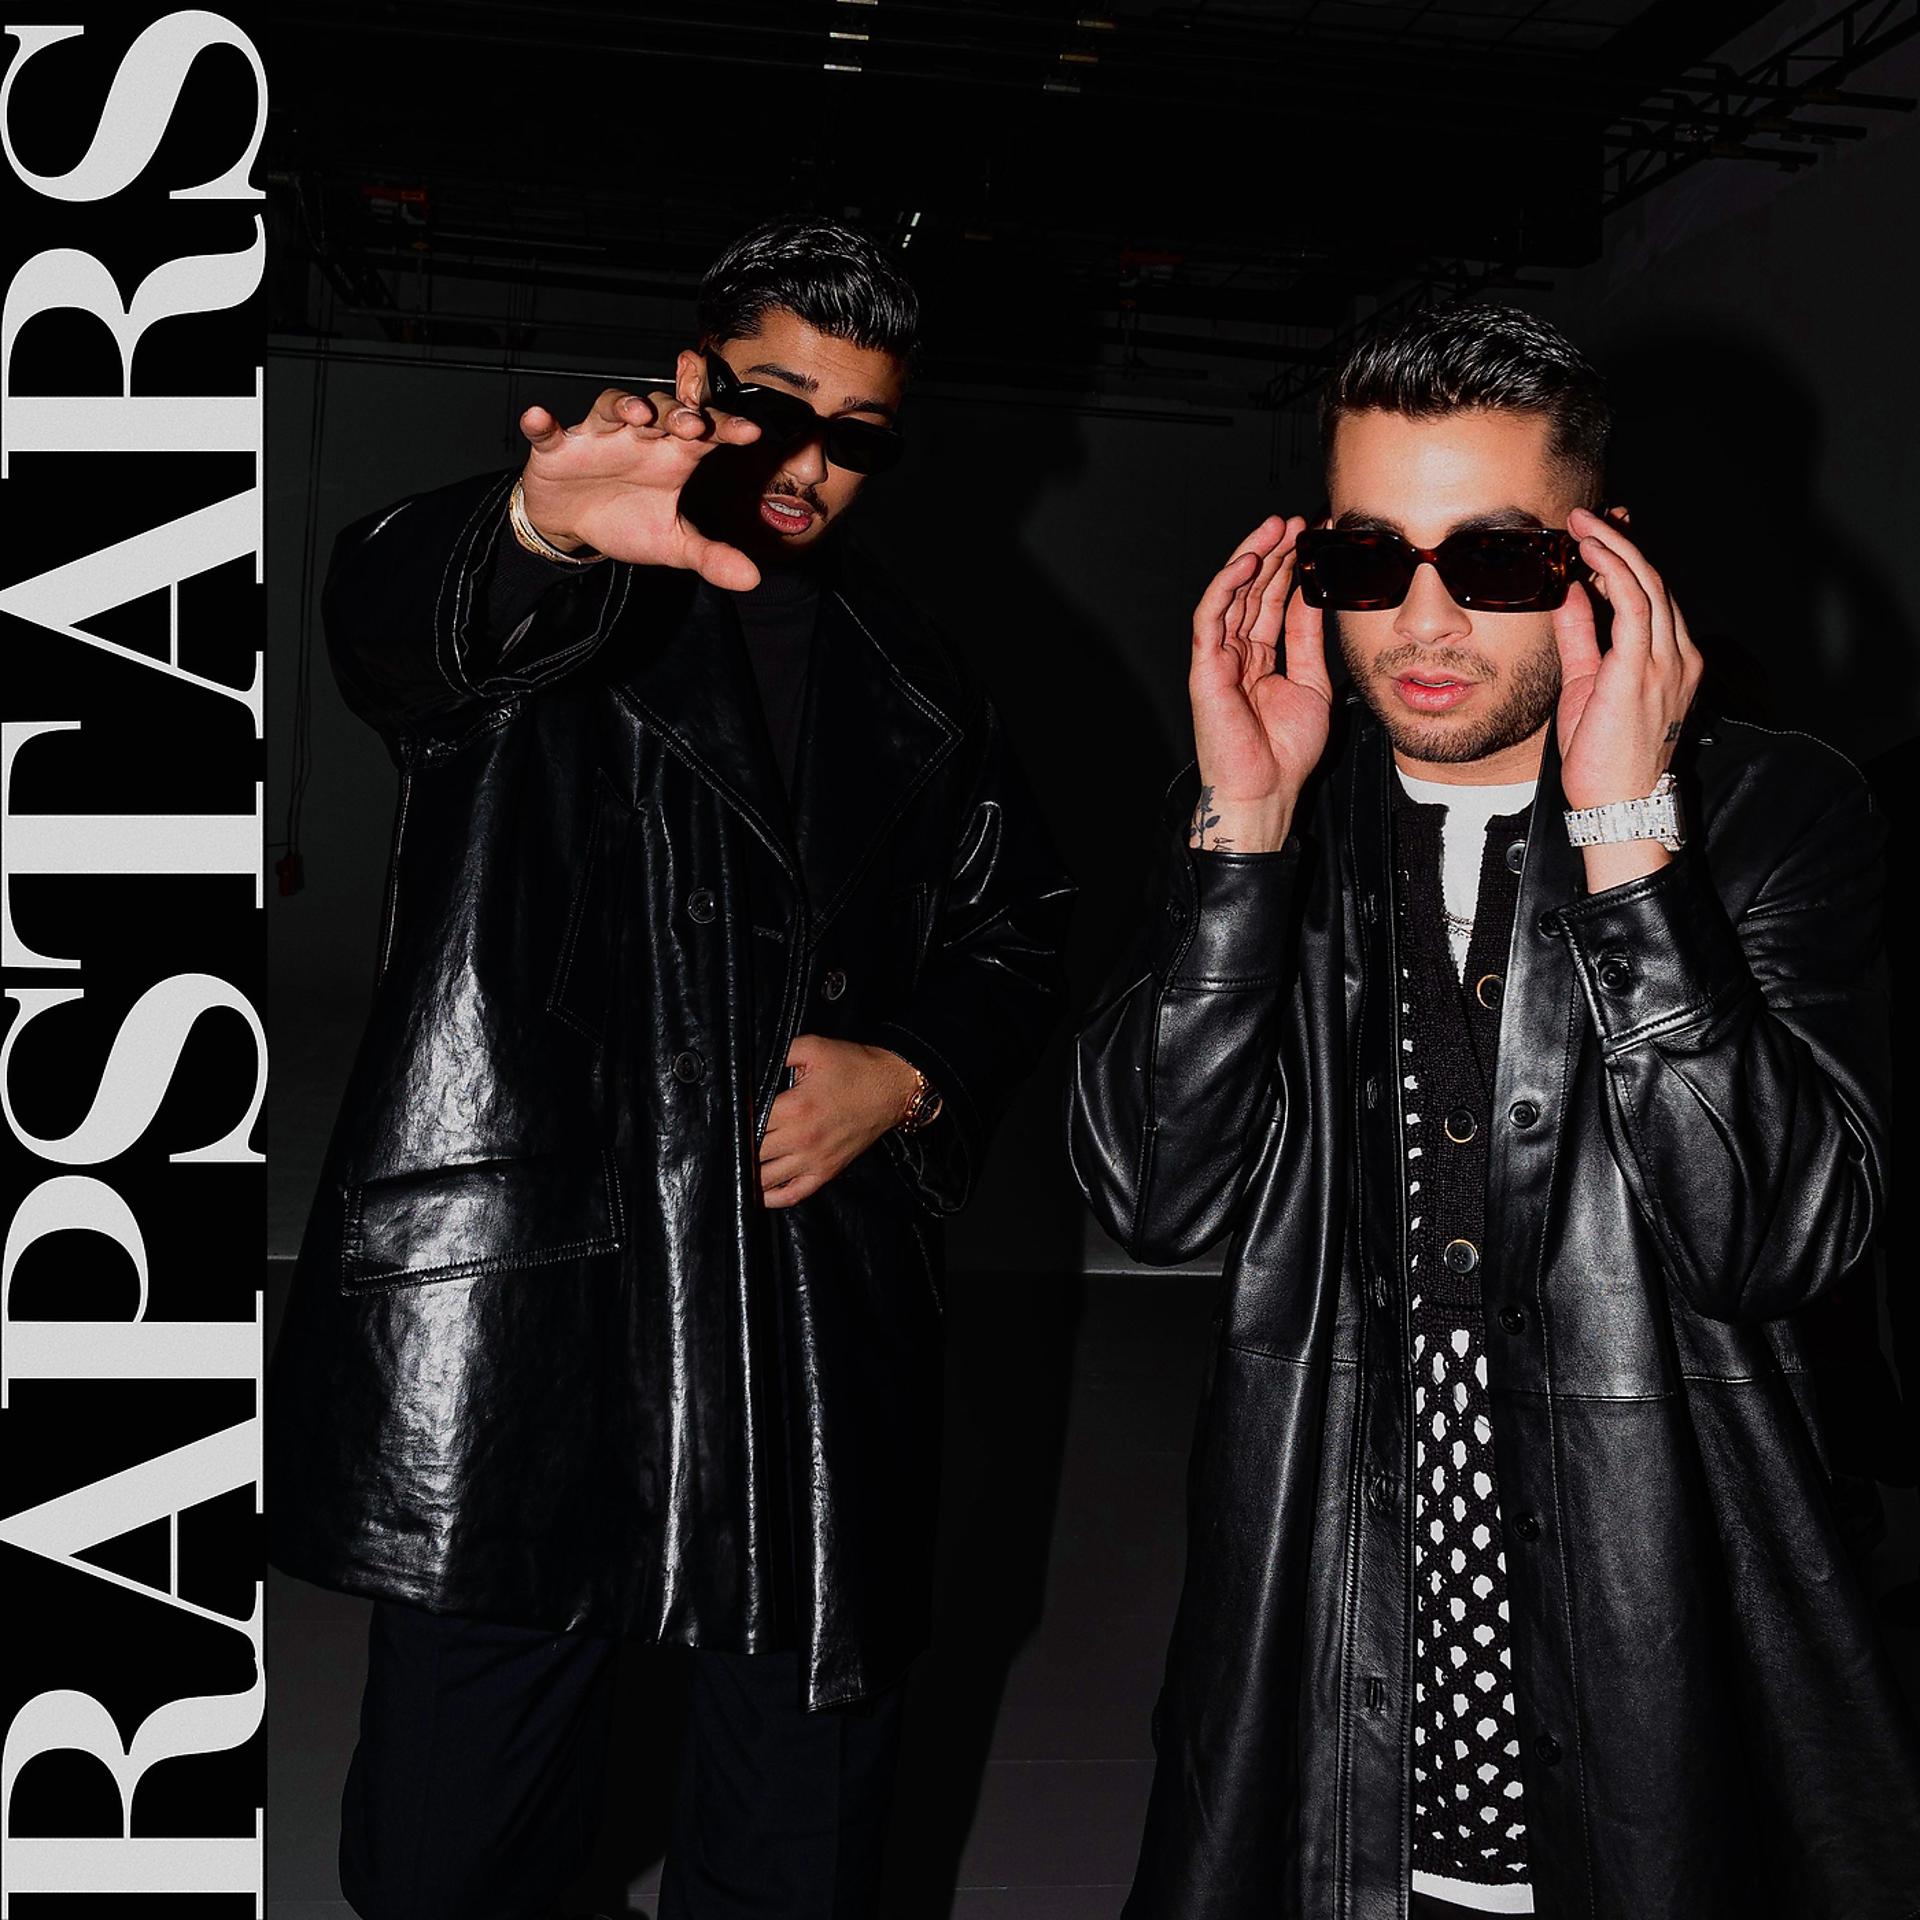 Постер альбома Rapstars